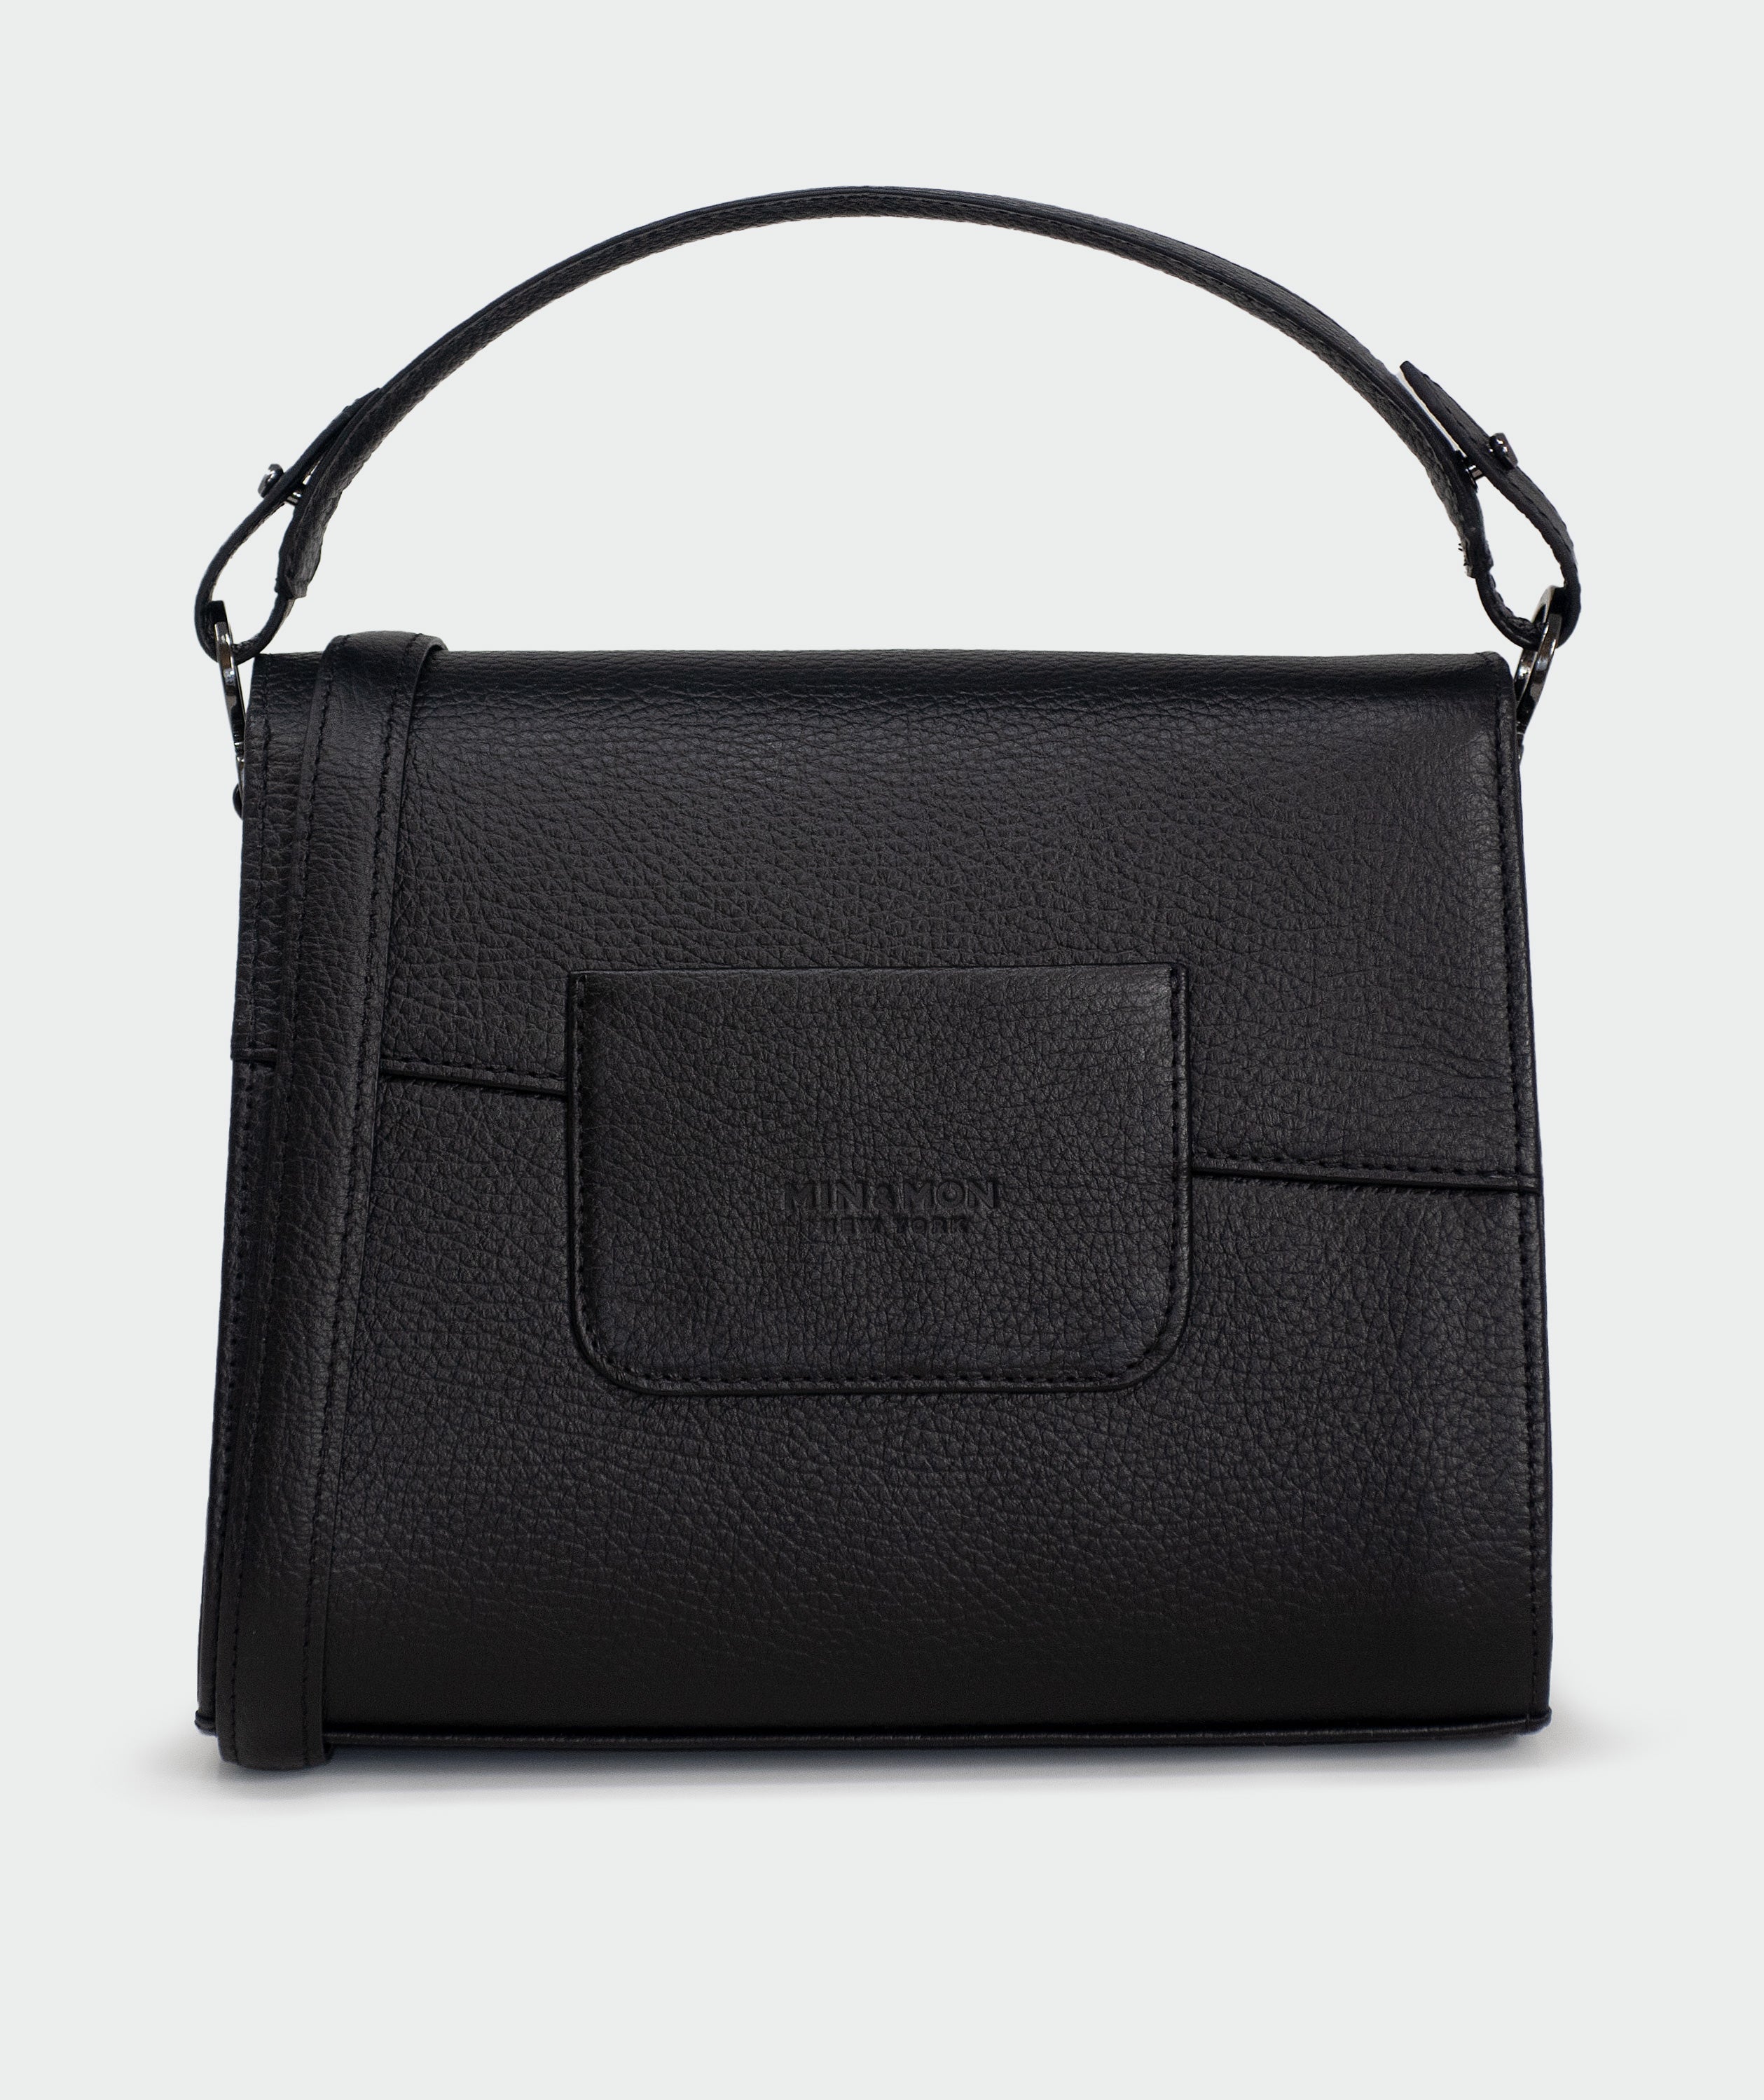 Anastasio Mini Crossbody Handbag Black Leather - All Over Eyes Embroidery - Back view